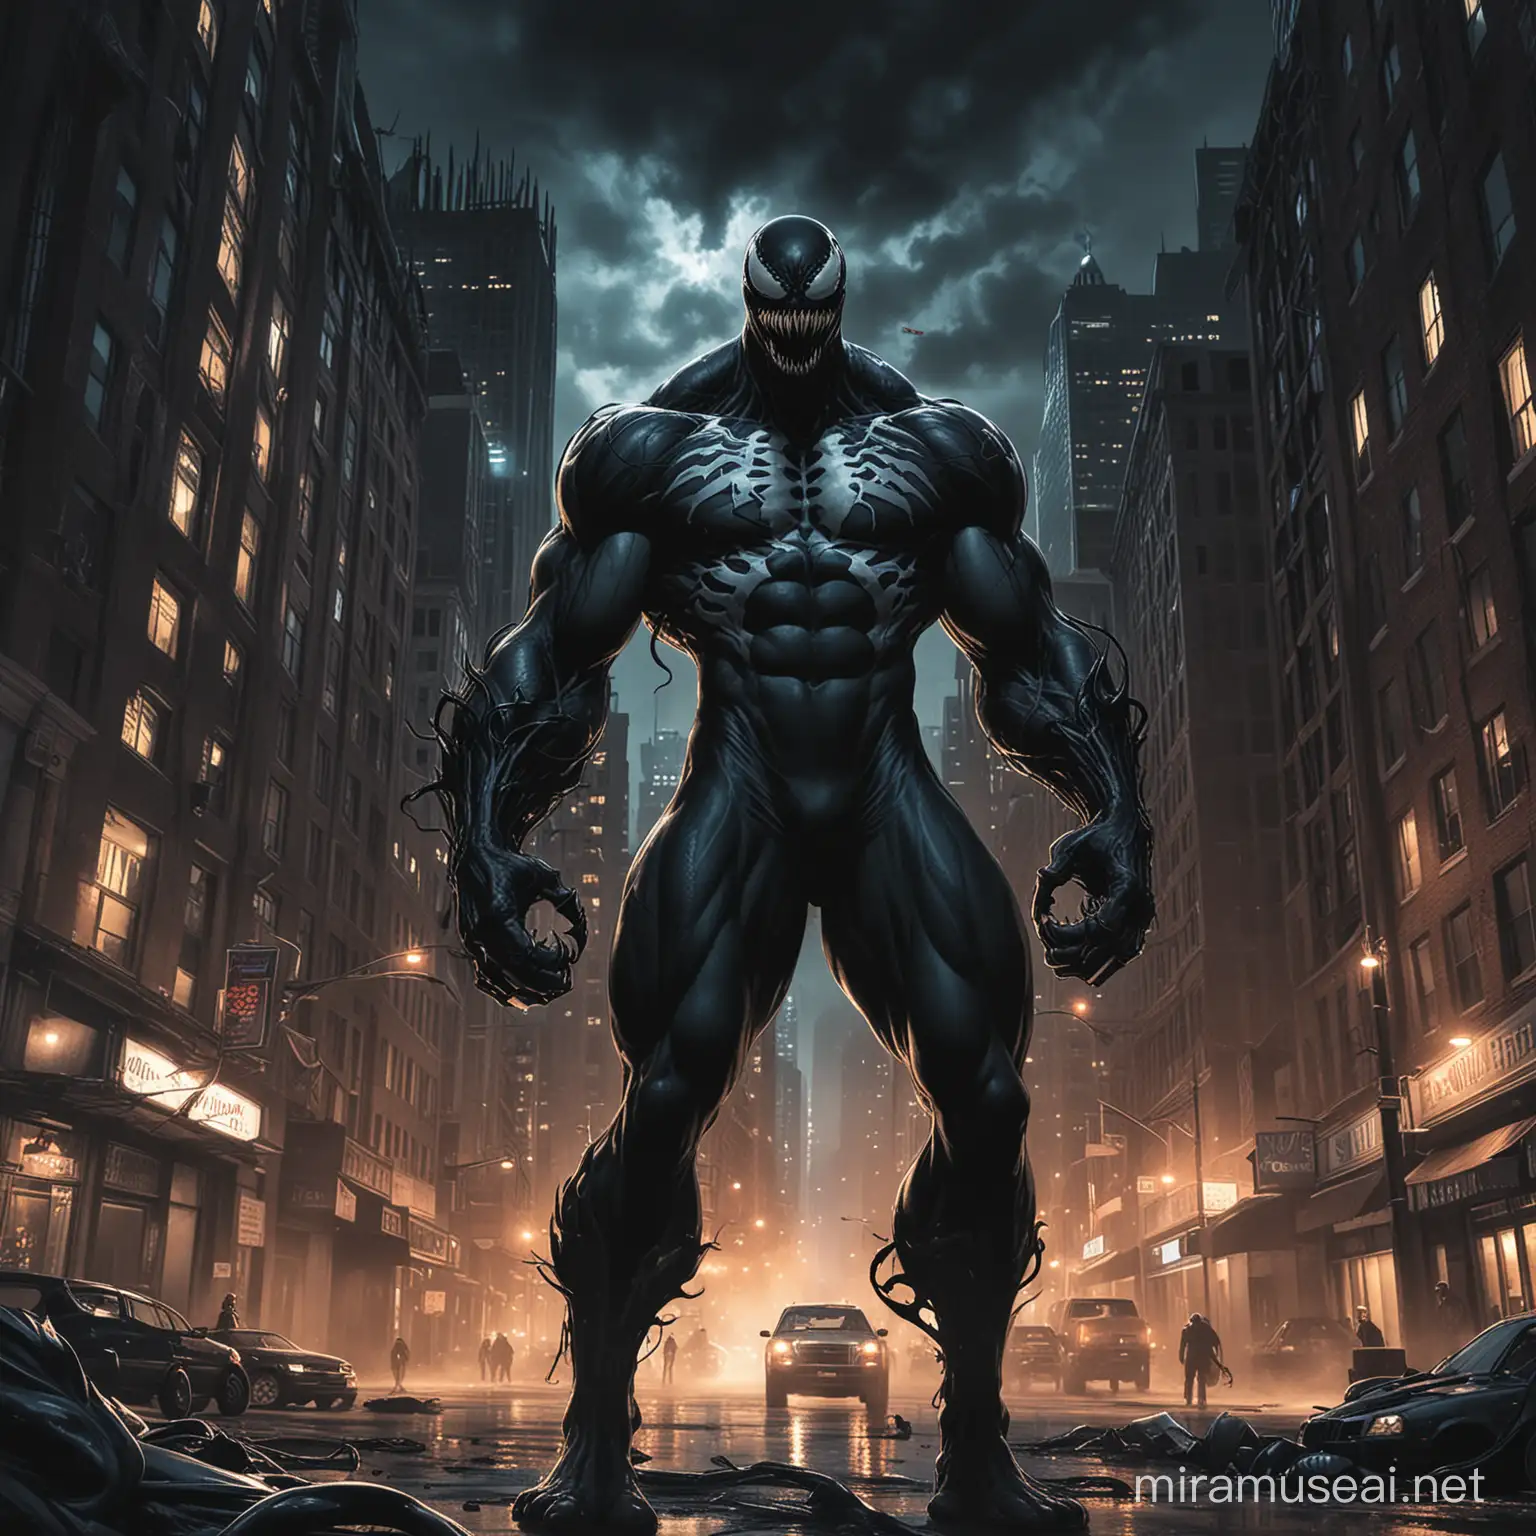 Five copies of the comic book character Venom in a dark downtown city scene